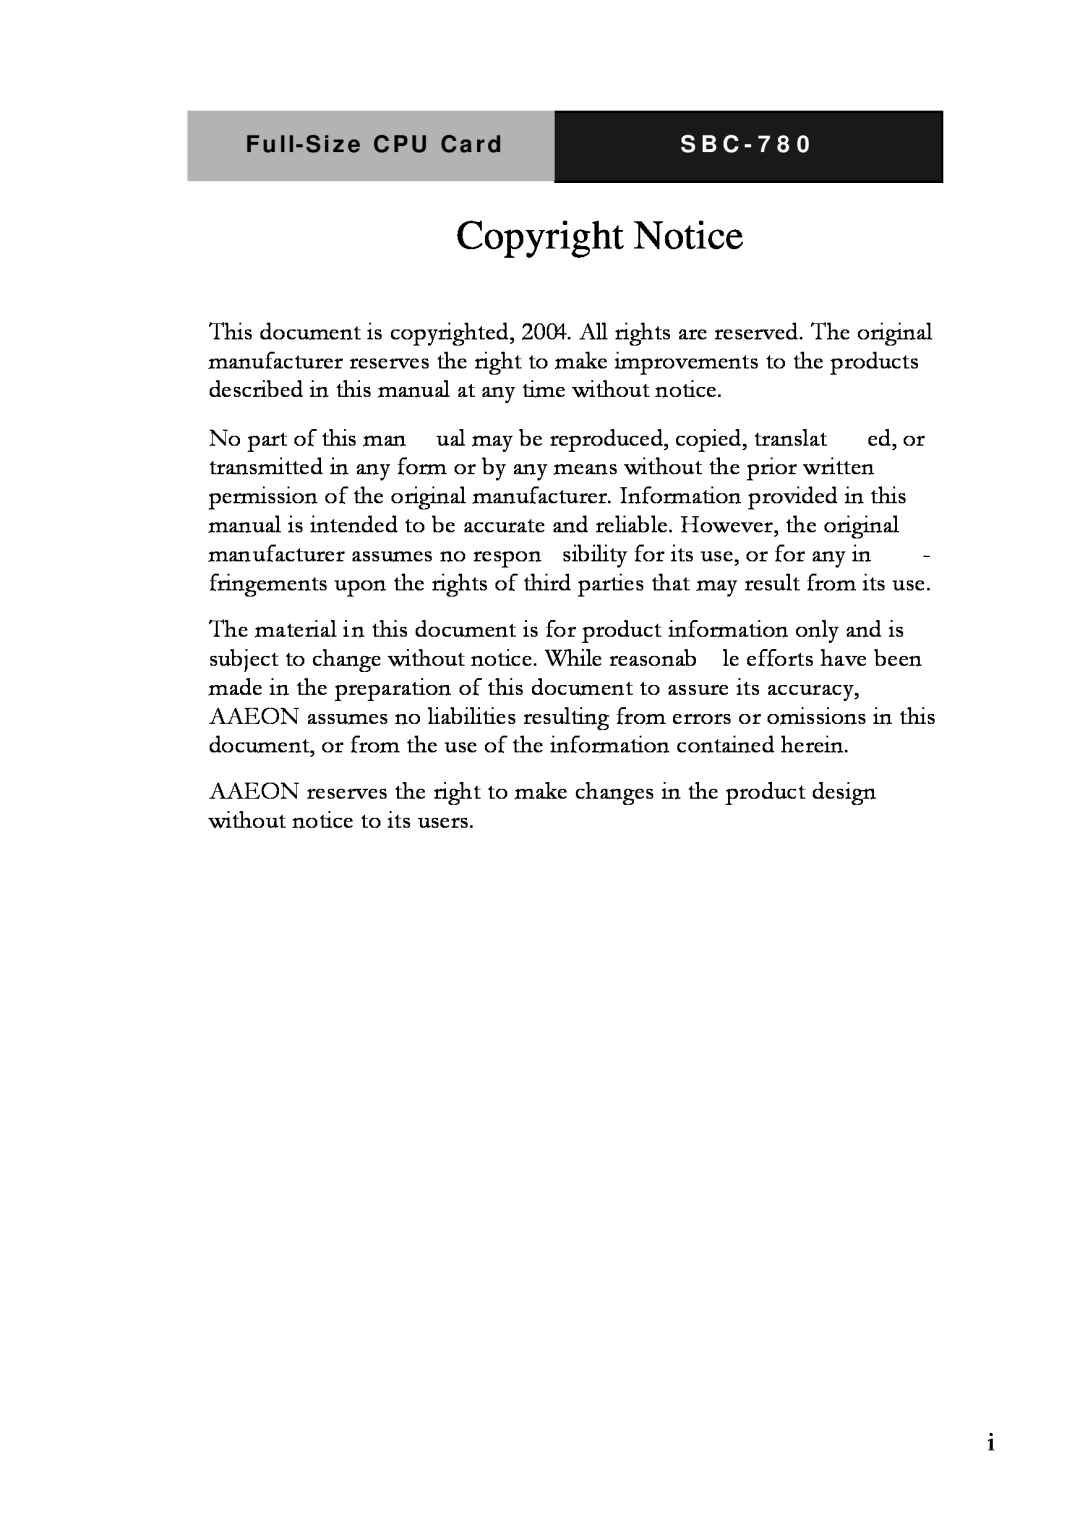 Intel SBC-780 manual Copyright Notice 